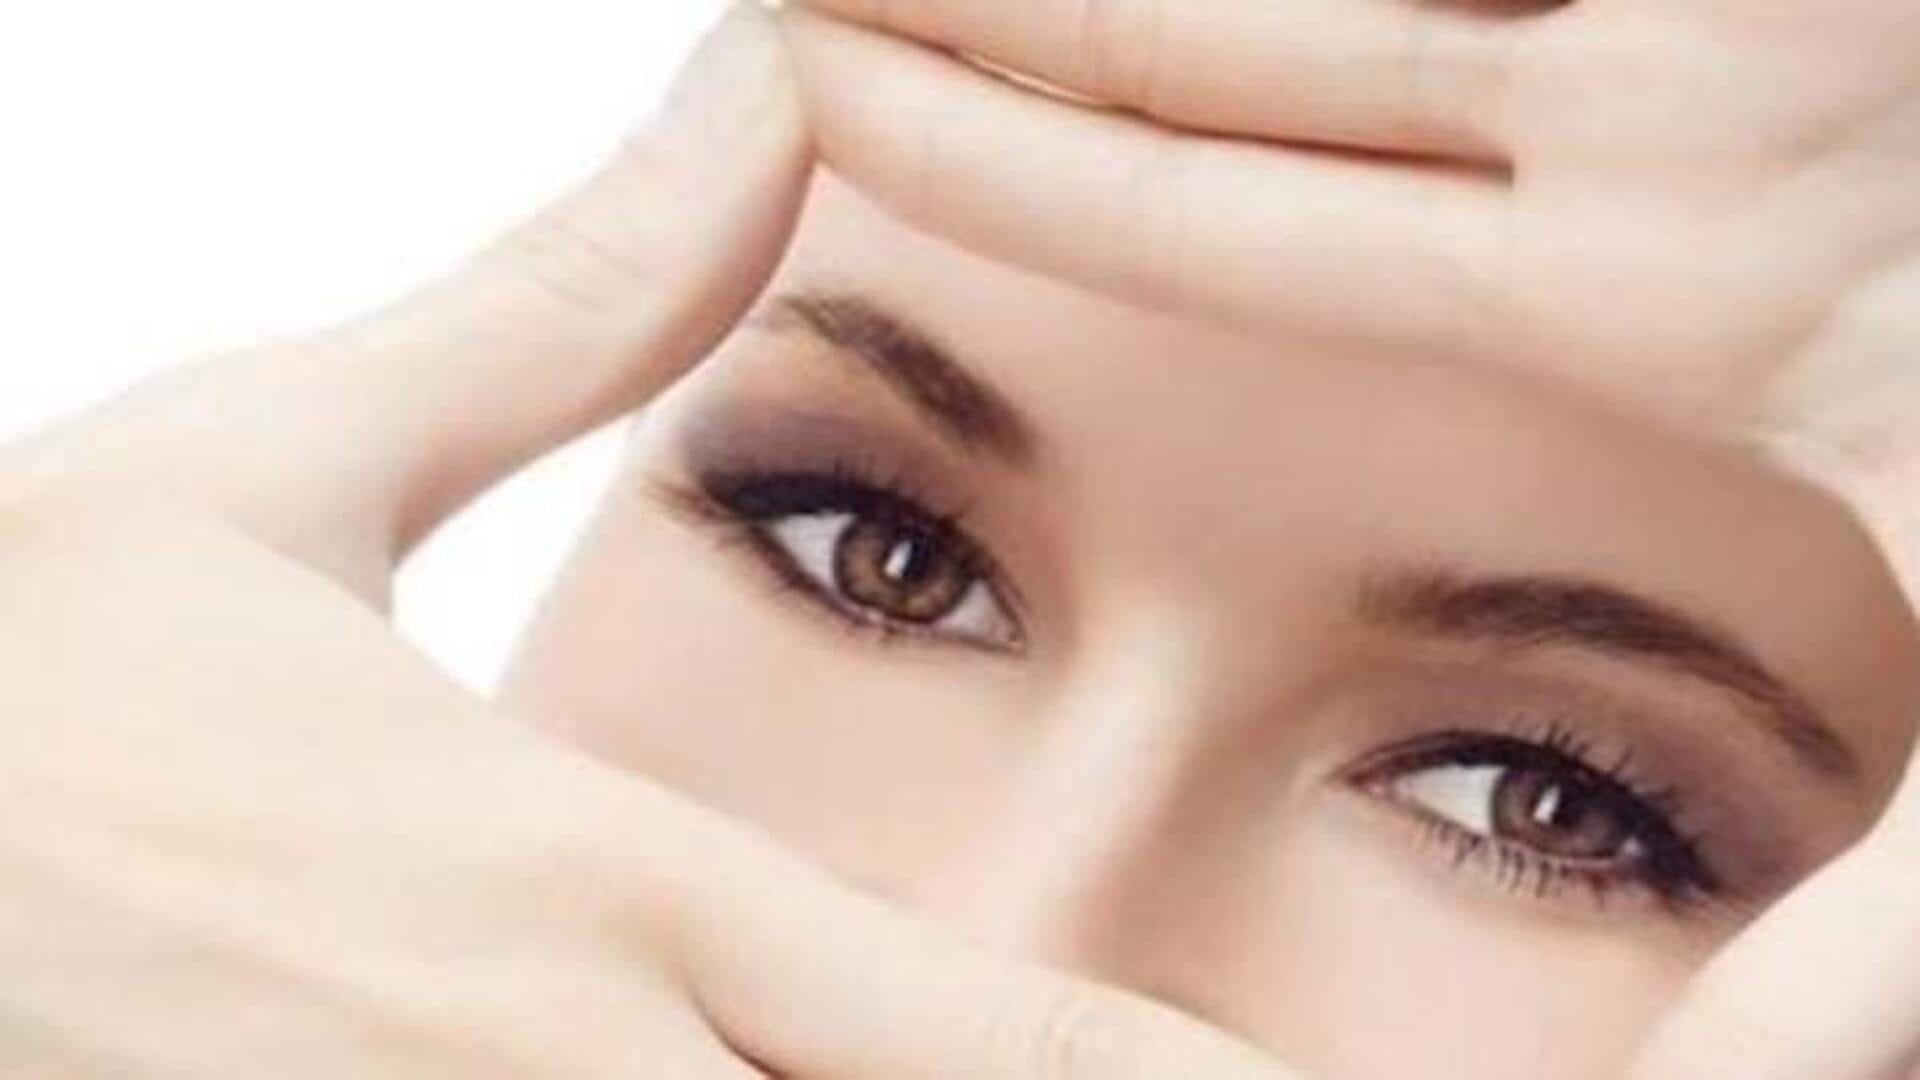 Ingin mata berbinar? Berikut 8 tips yang dapat membantu